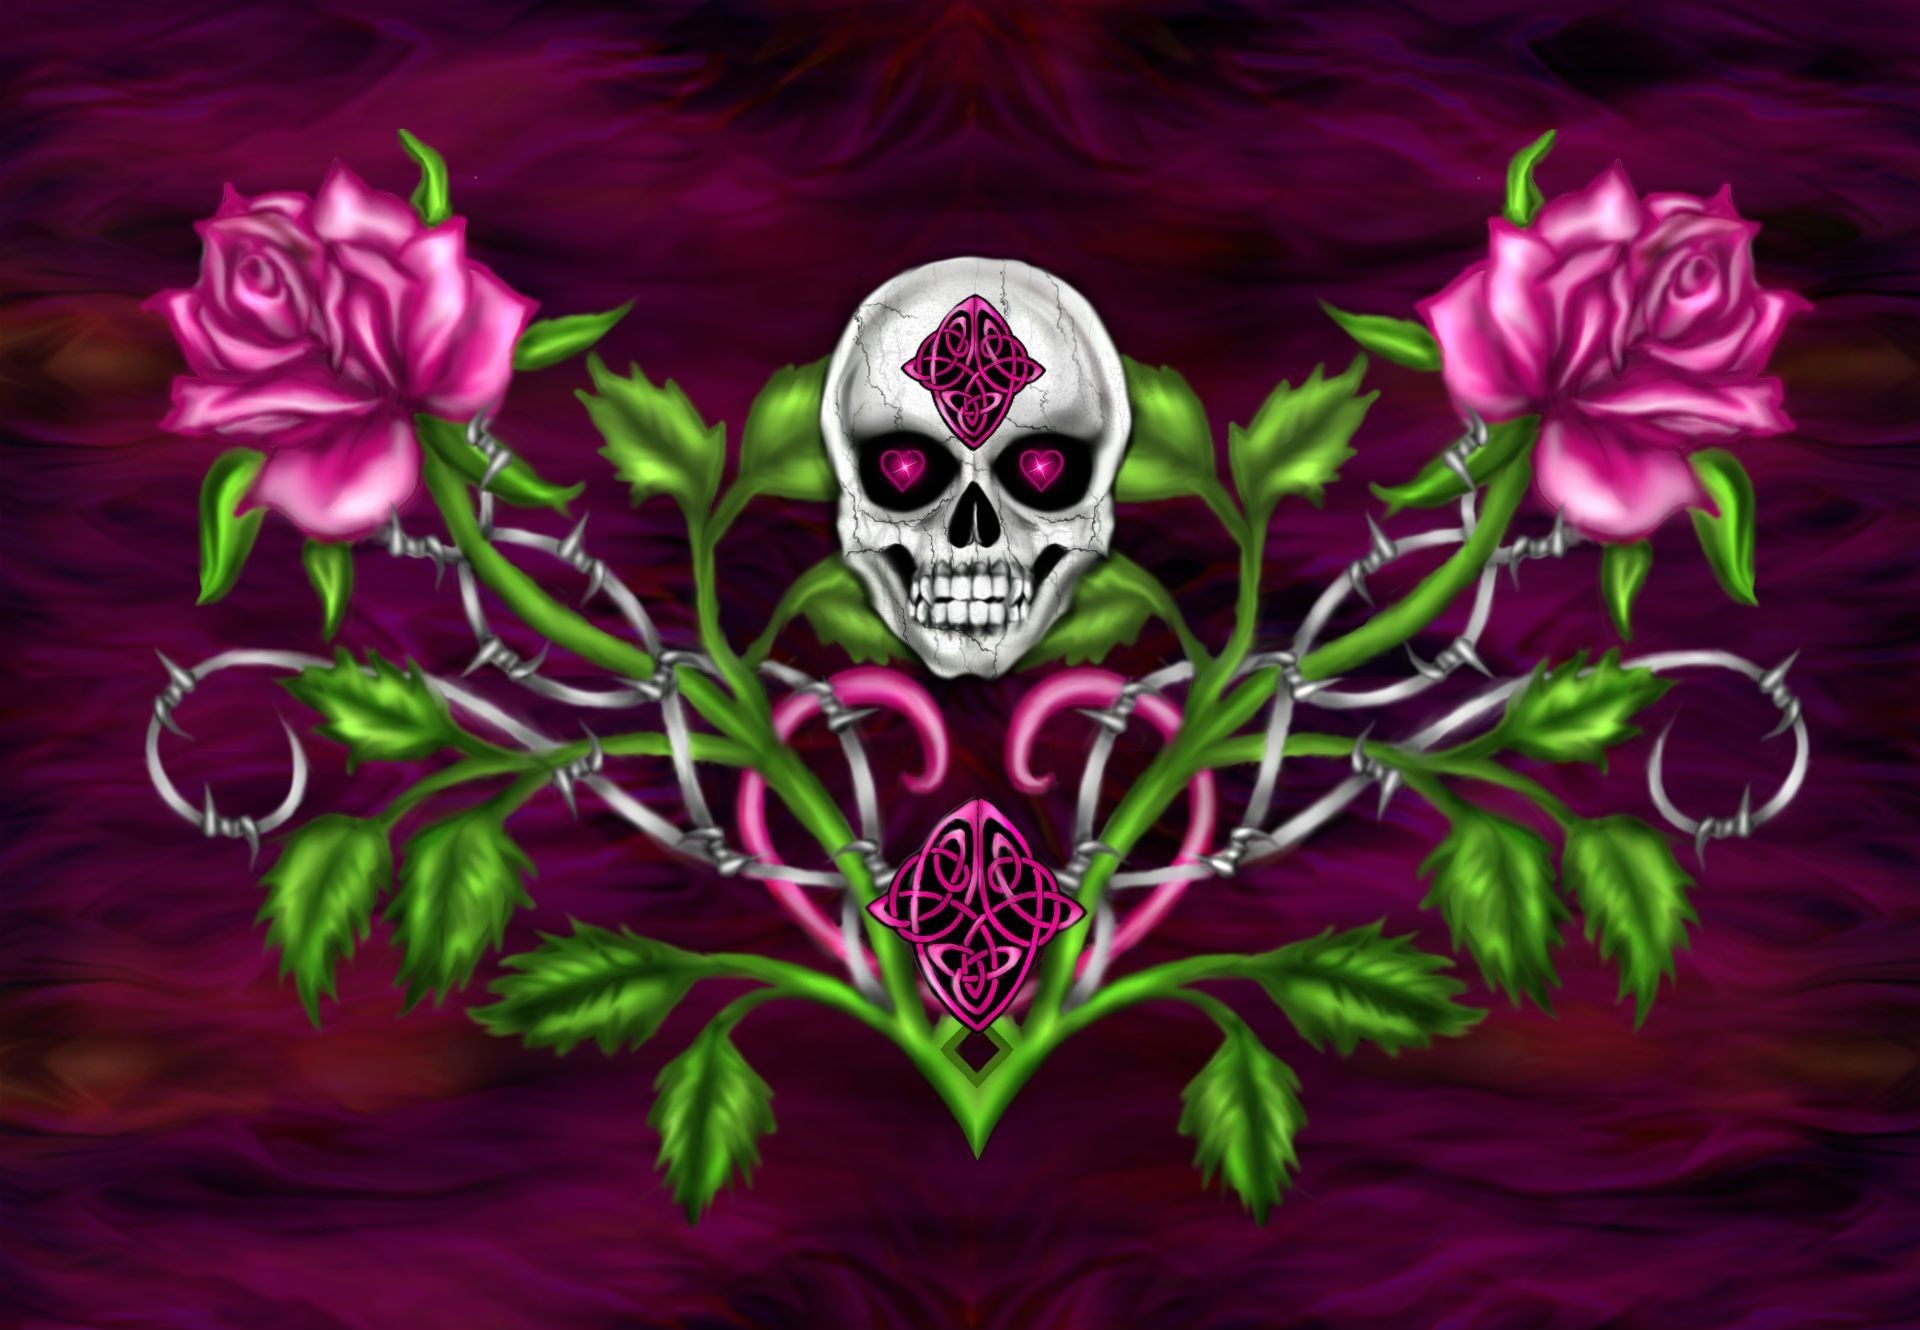 Gothic Skull, High Resolution Wallpaper For Free Skulls And Roses